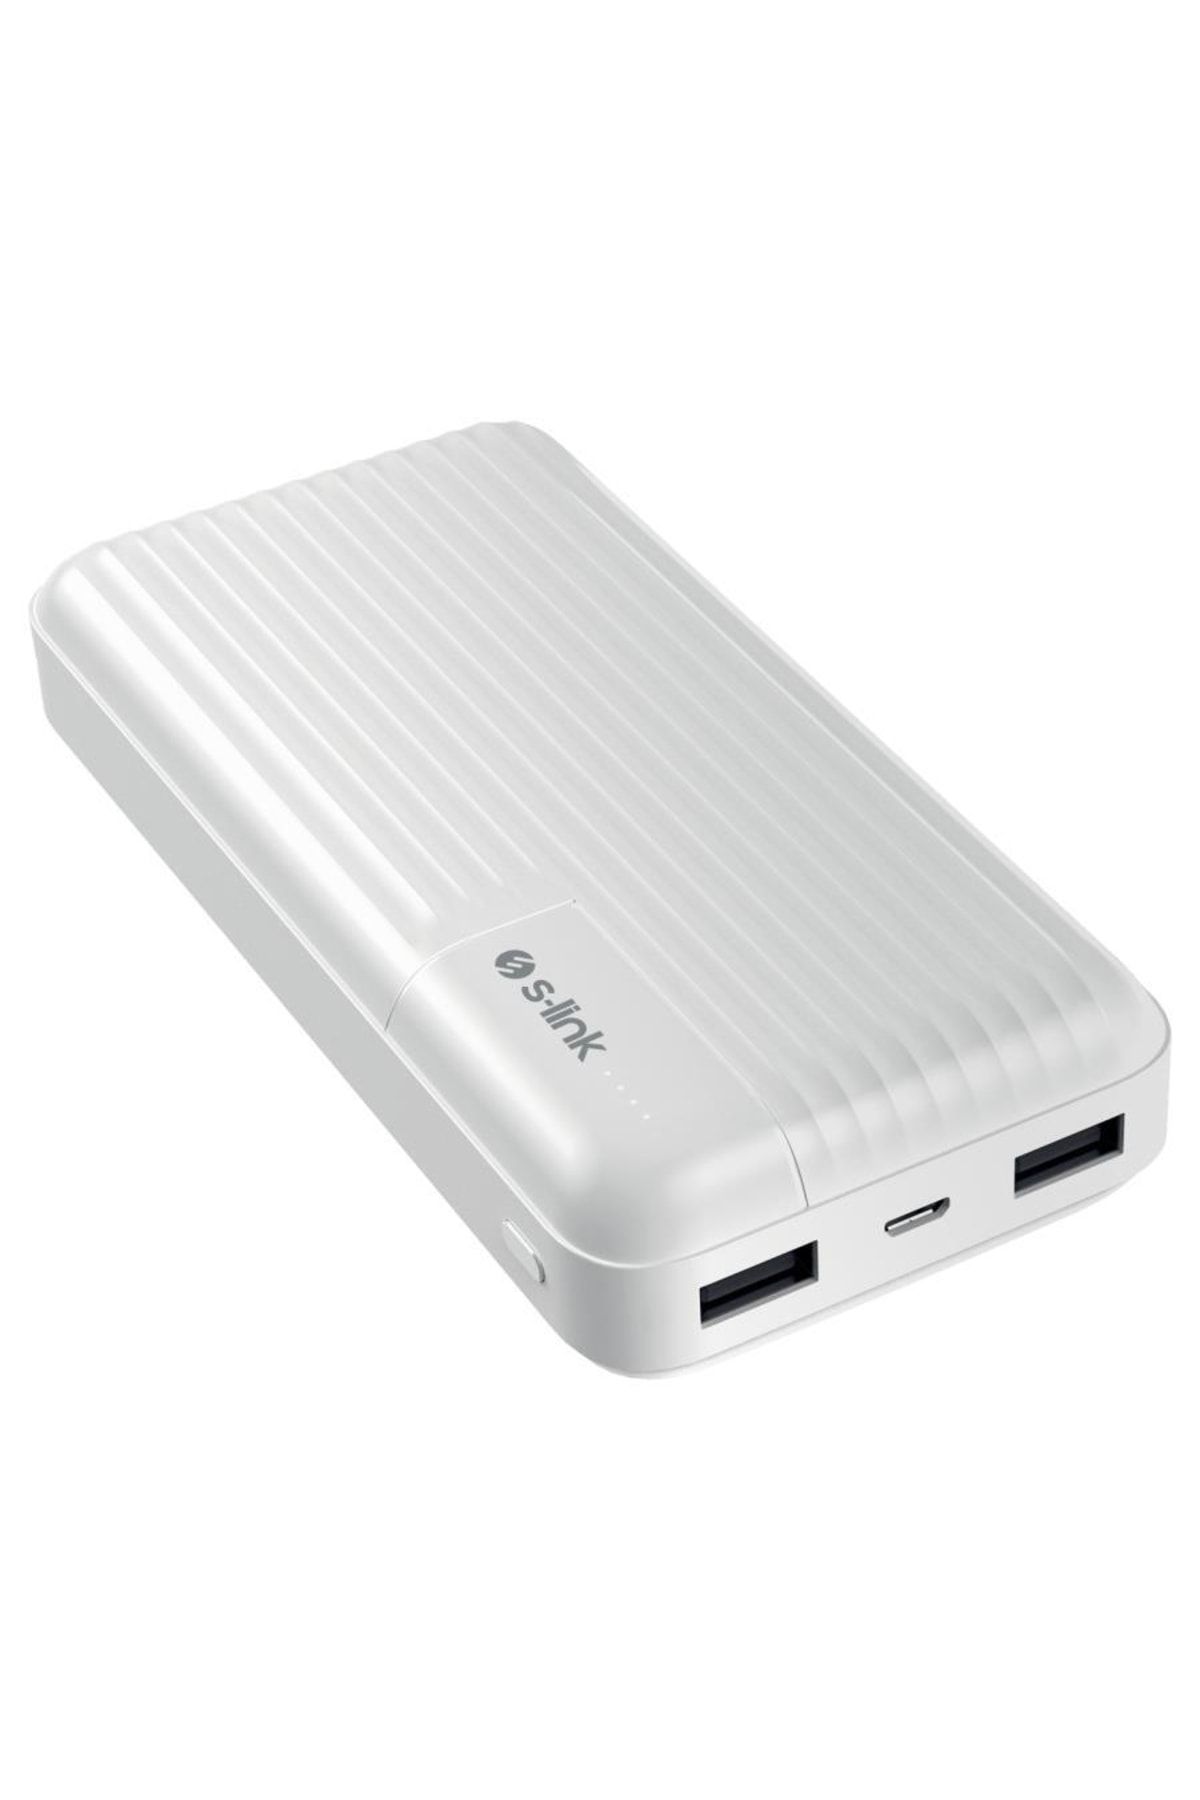 S-Link G201 20000mah 2-usb Çıkış + 1-micro Giriş Beyaz Taşınabilir Pil Şarj Cihazı Powerbank